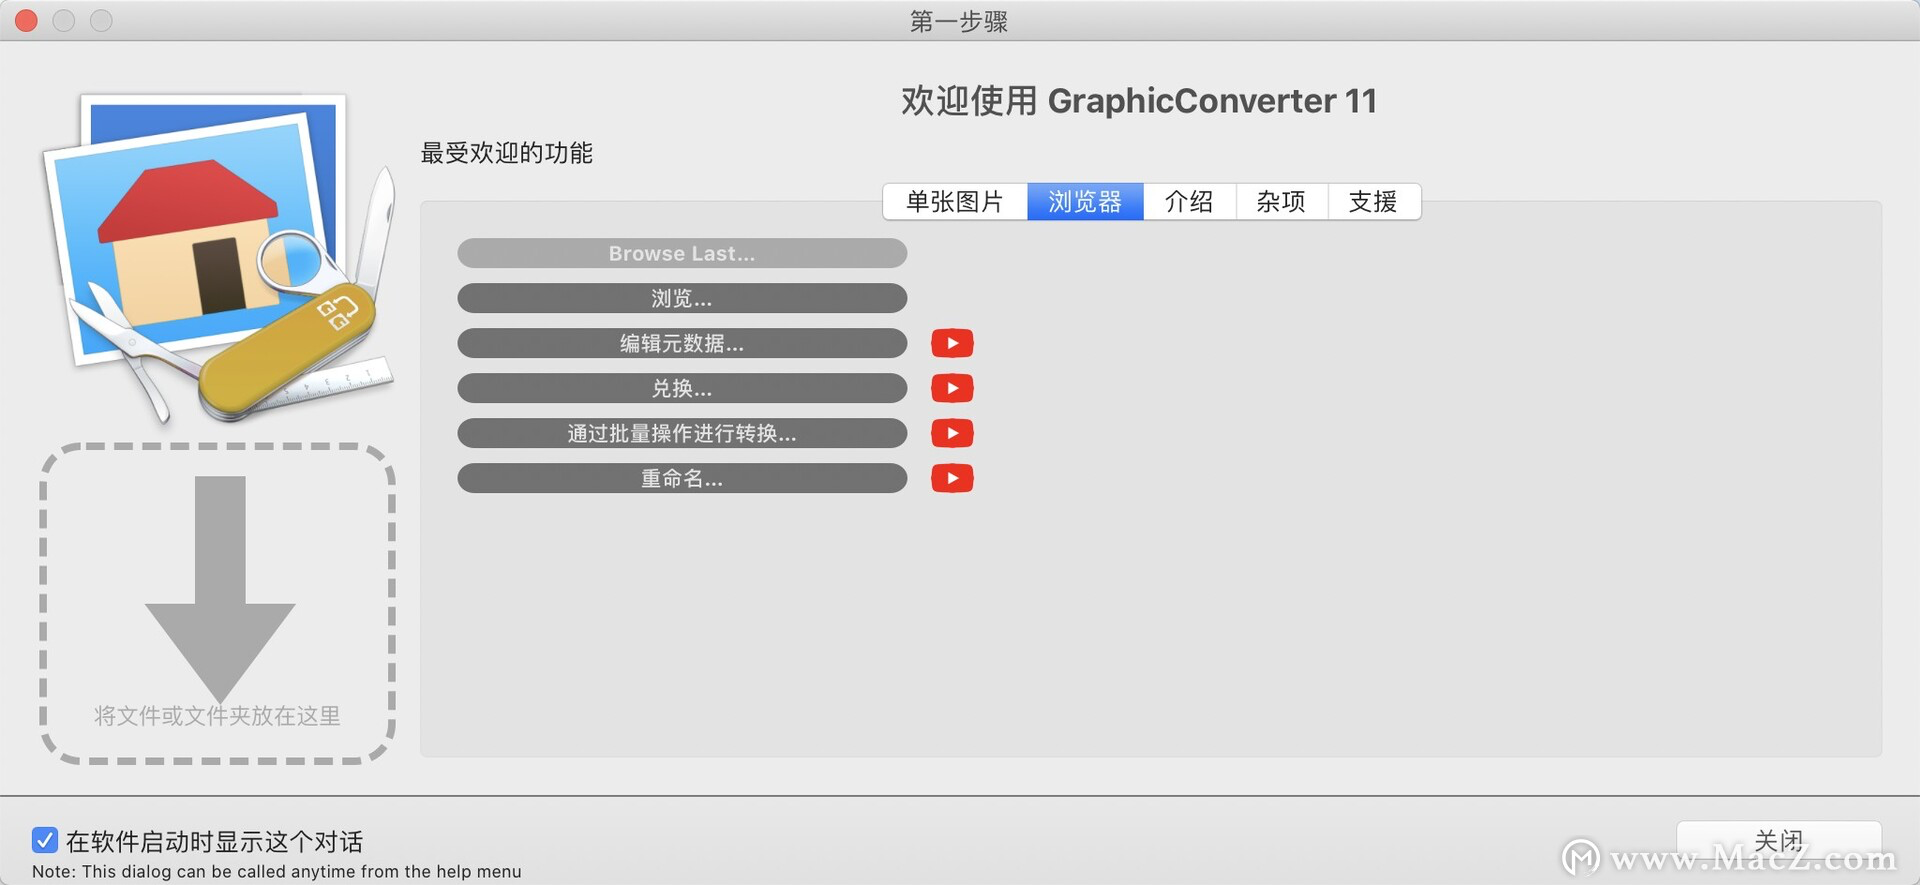 Mac图片浏览器推荐GraphicConverter 11 for Mac不容错过！ - 知乎